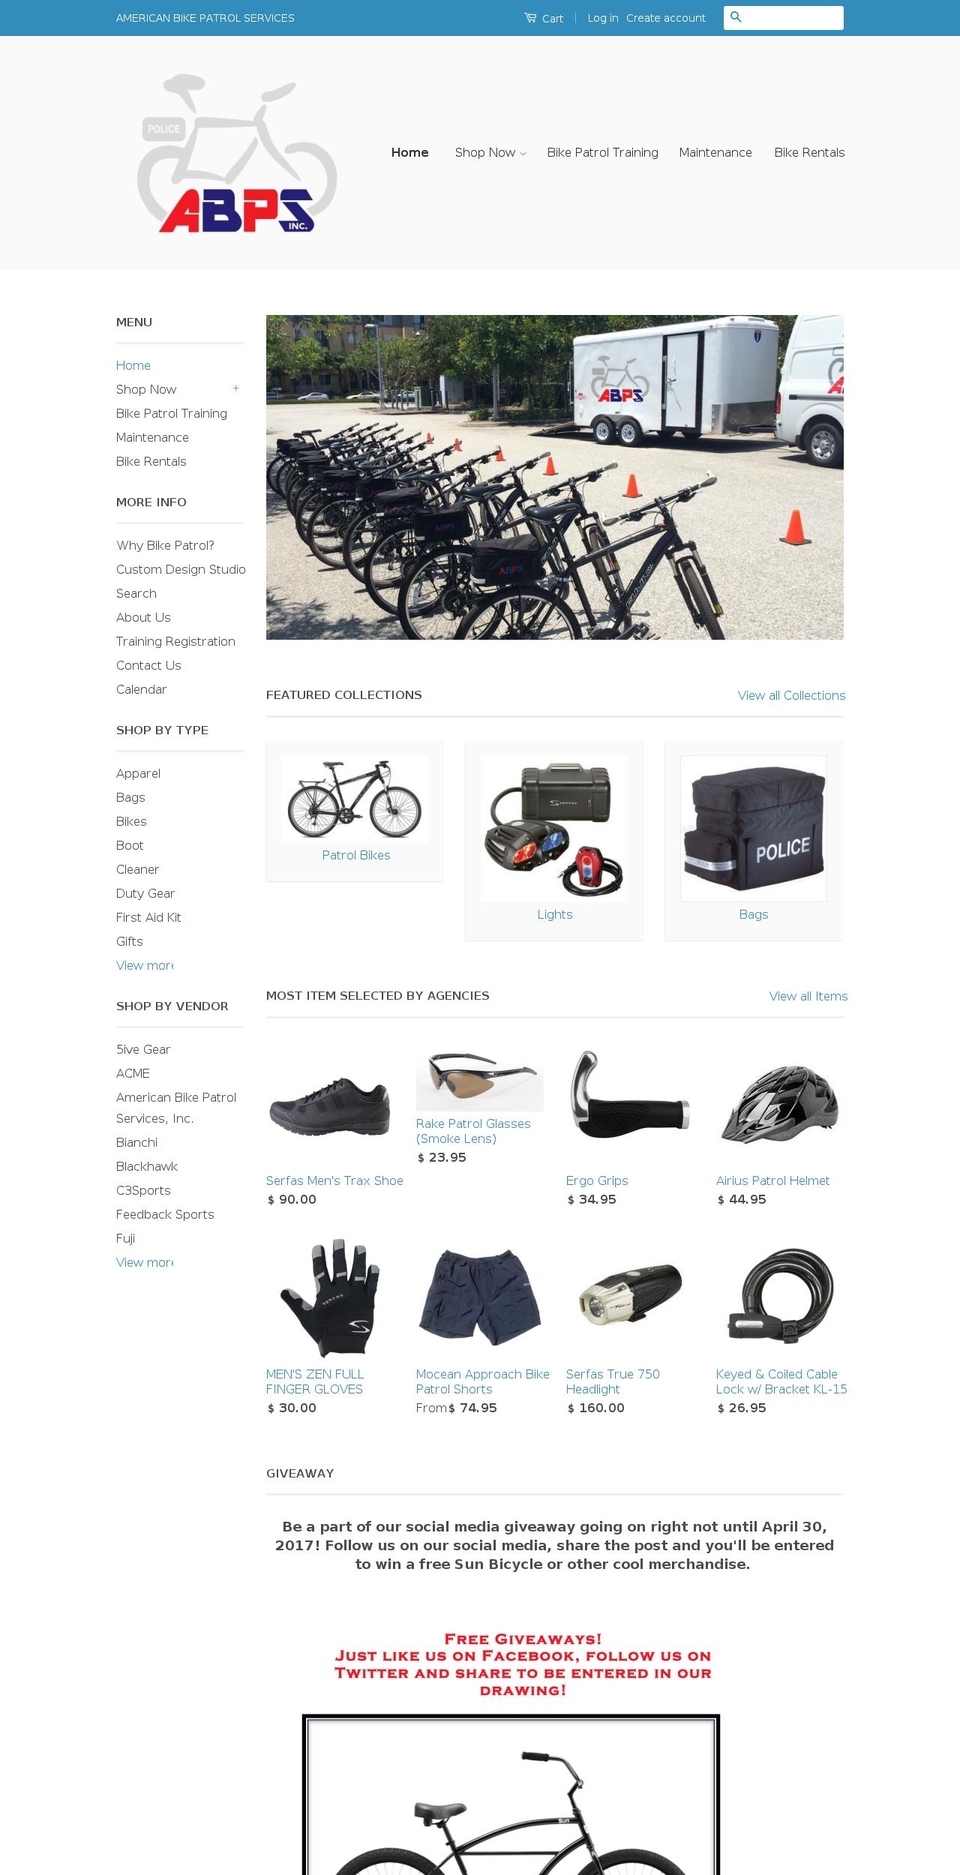 bikepatrol.mobi shopify website screenshot